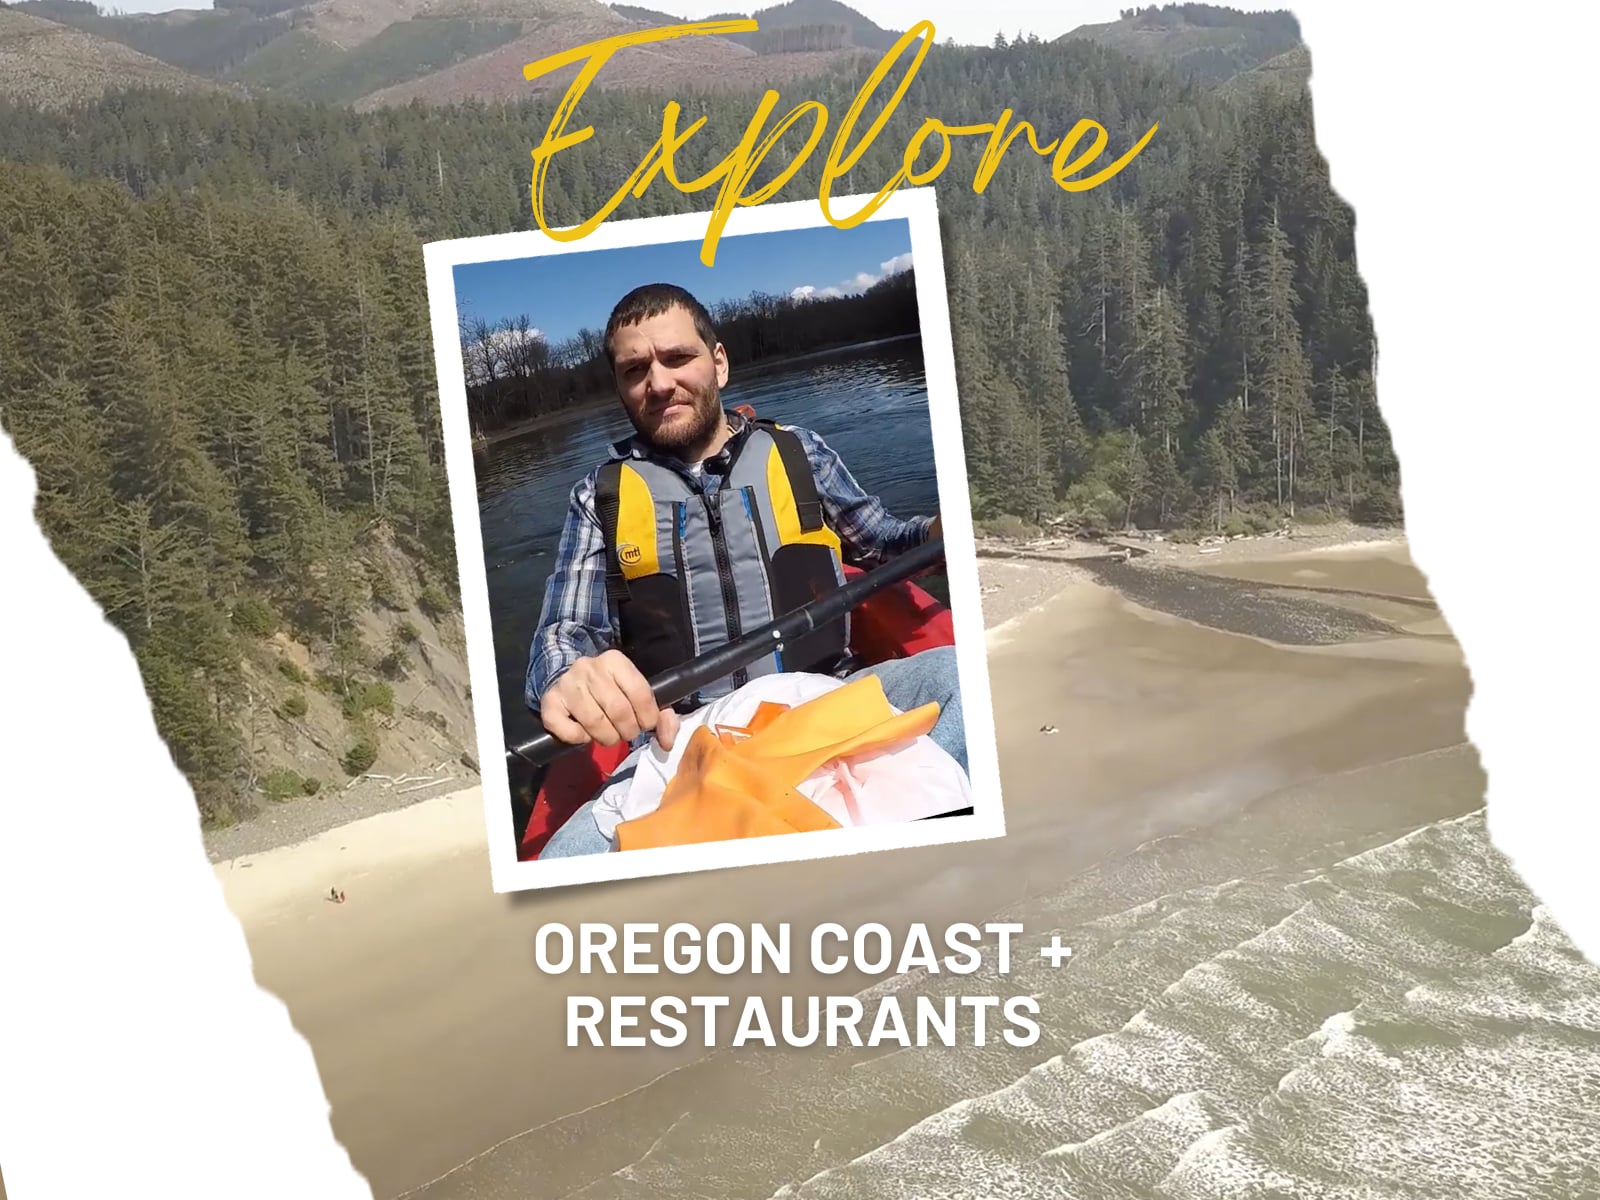 Explore the Oregon Coast & Restaurants!